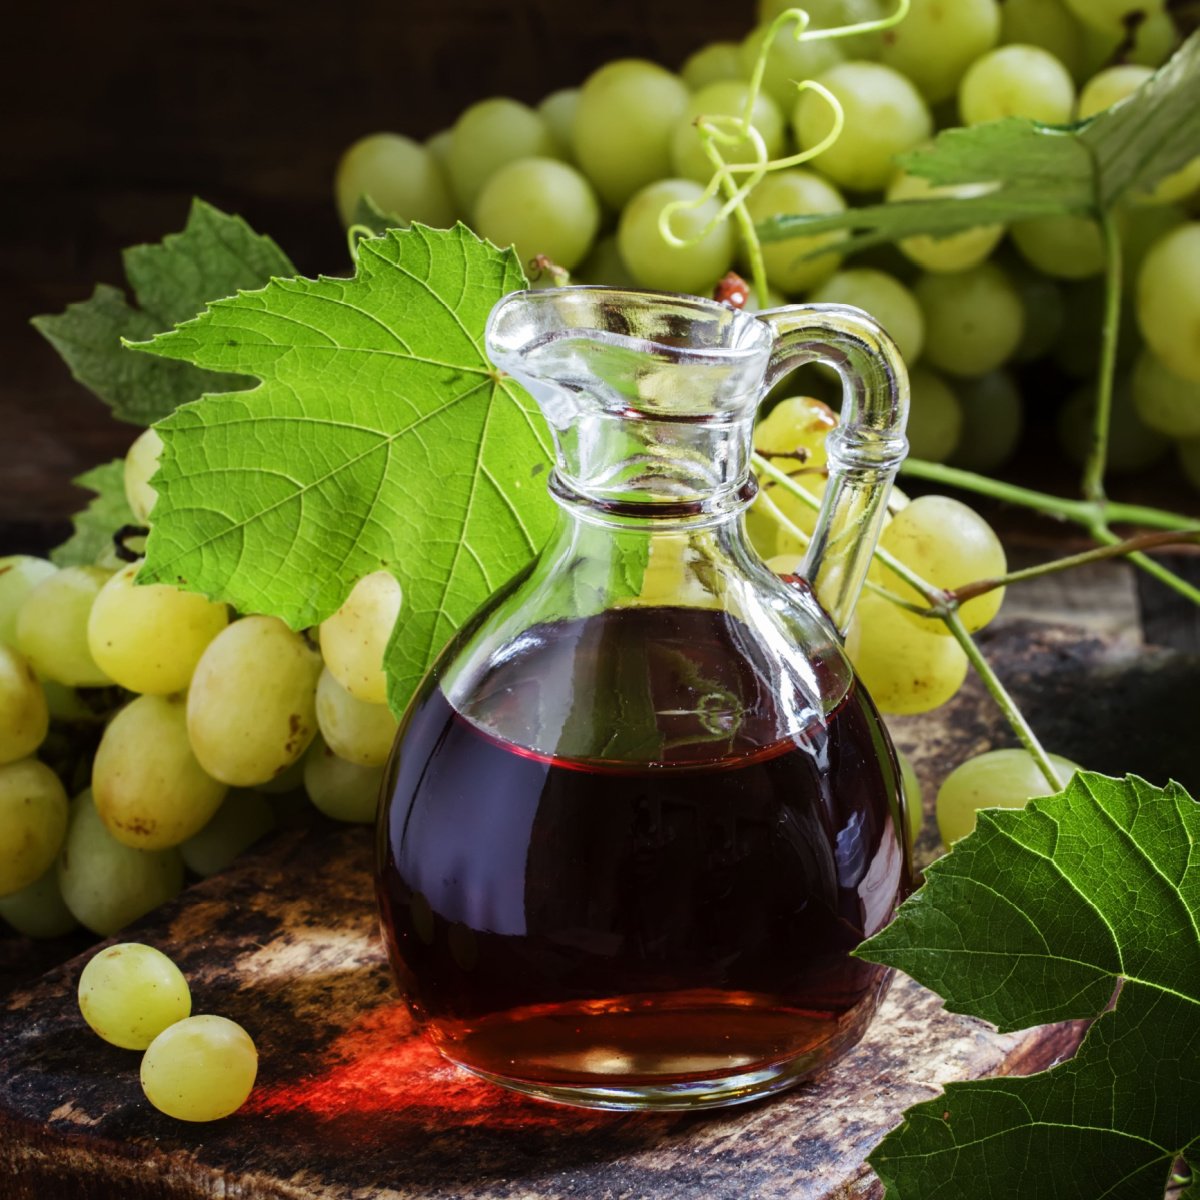 wine vinegar with white grapes